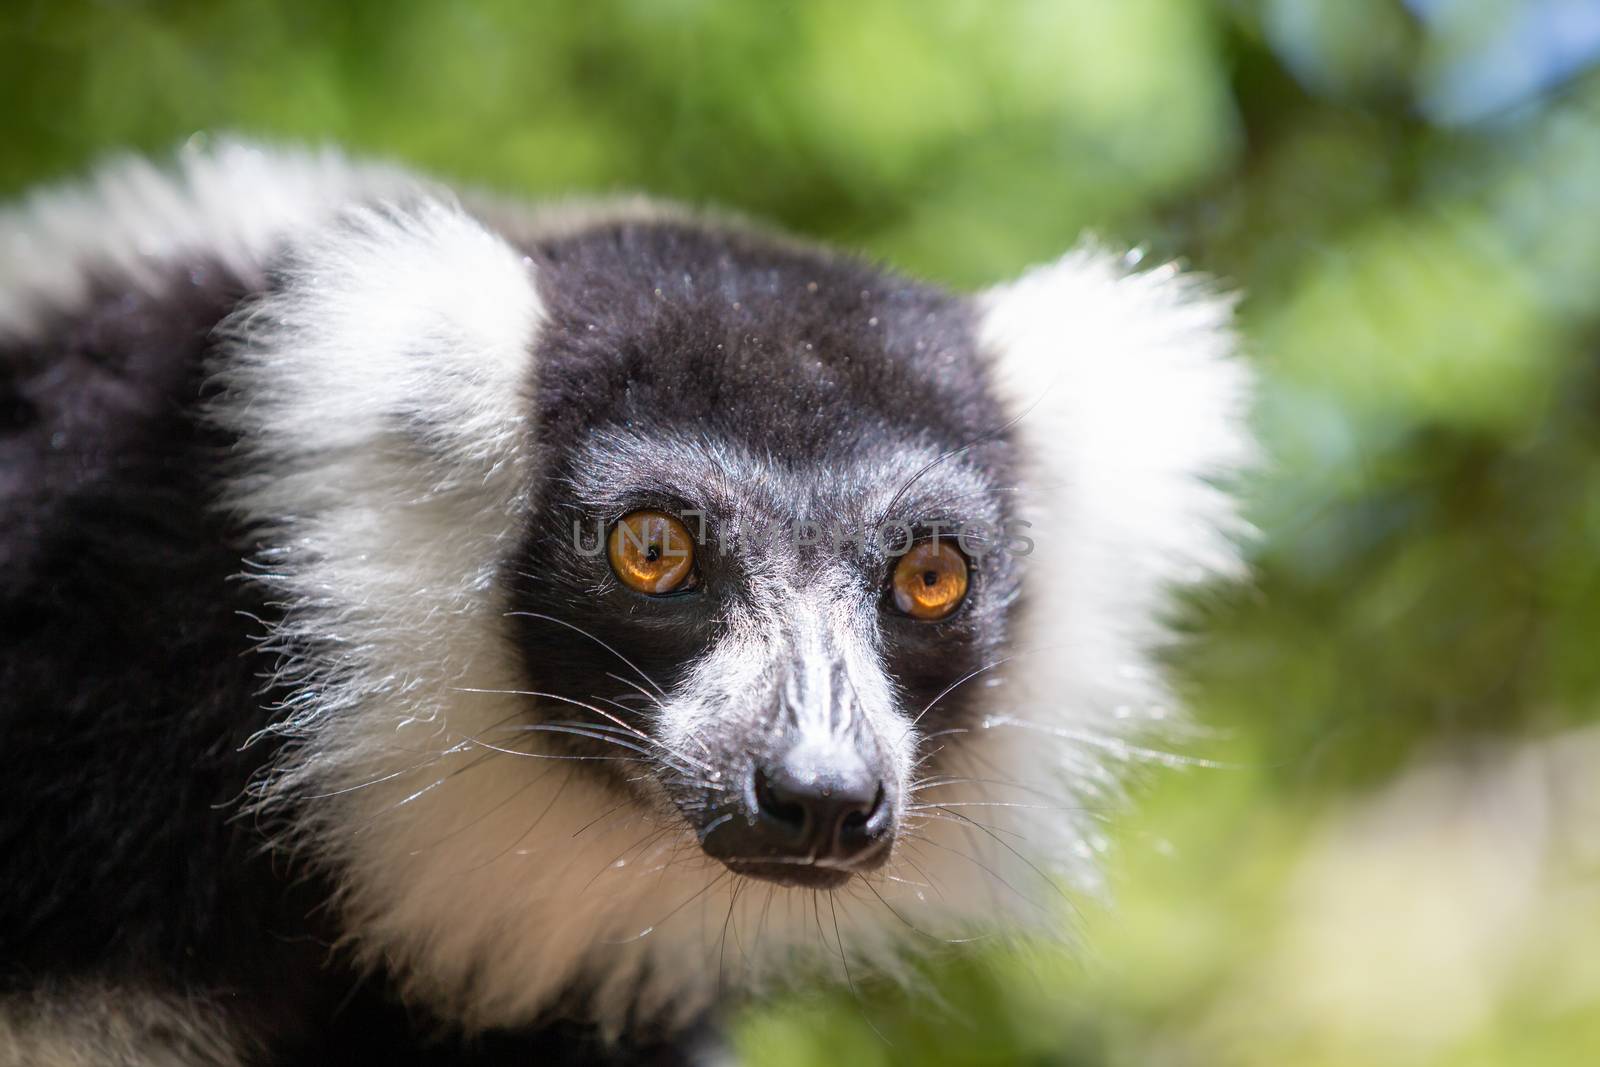 A black and white Vari Lemur looks quite curious.